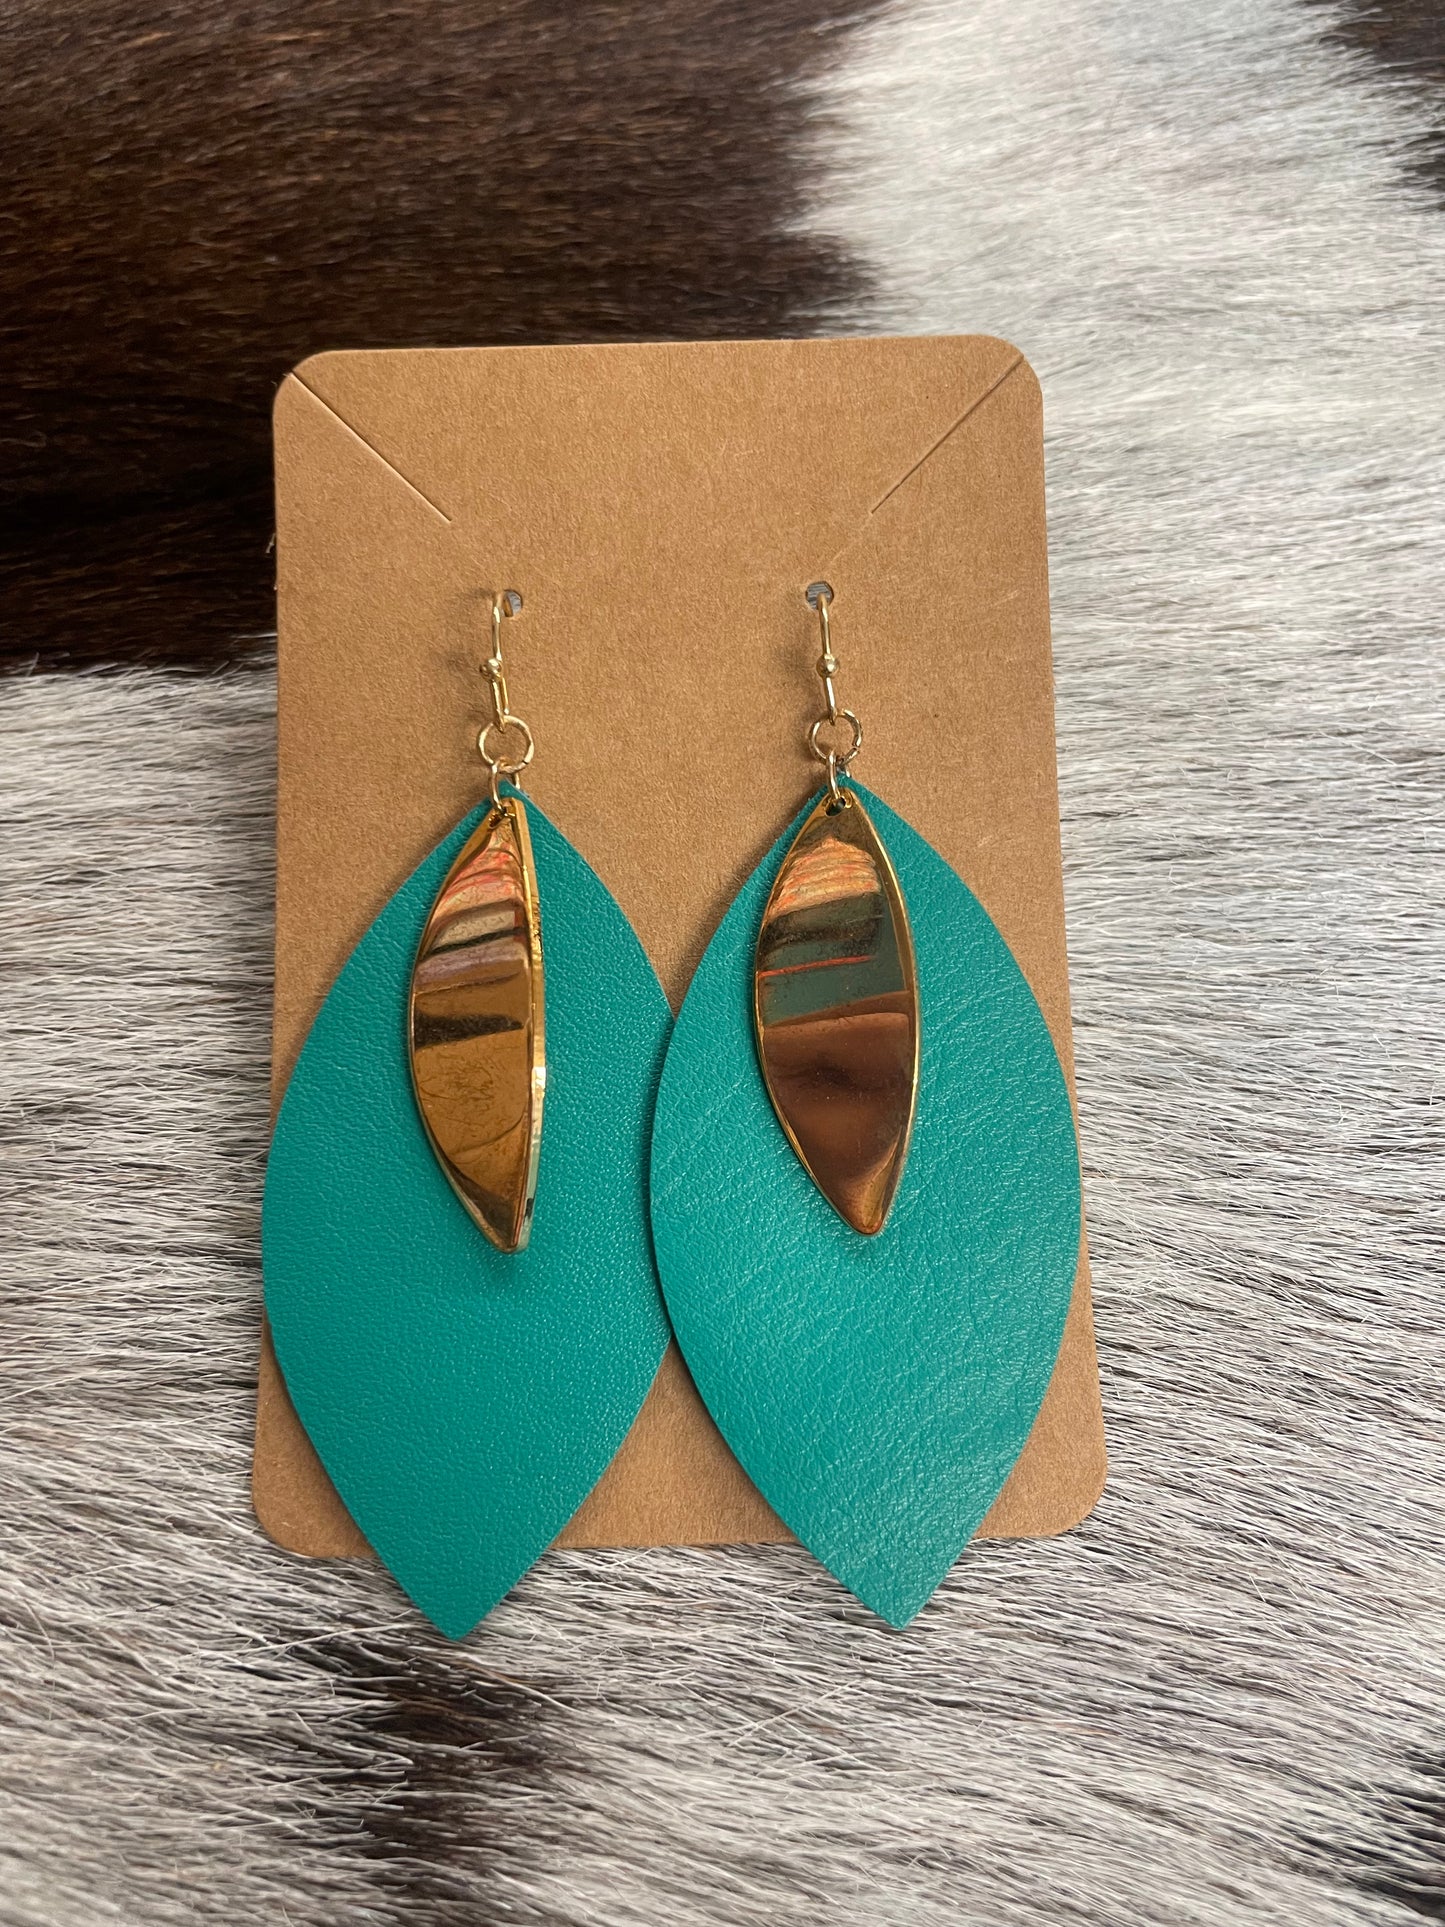 The Peacock Earrings